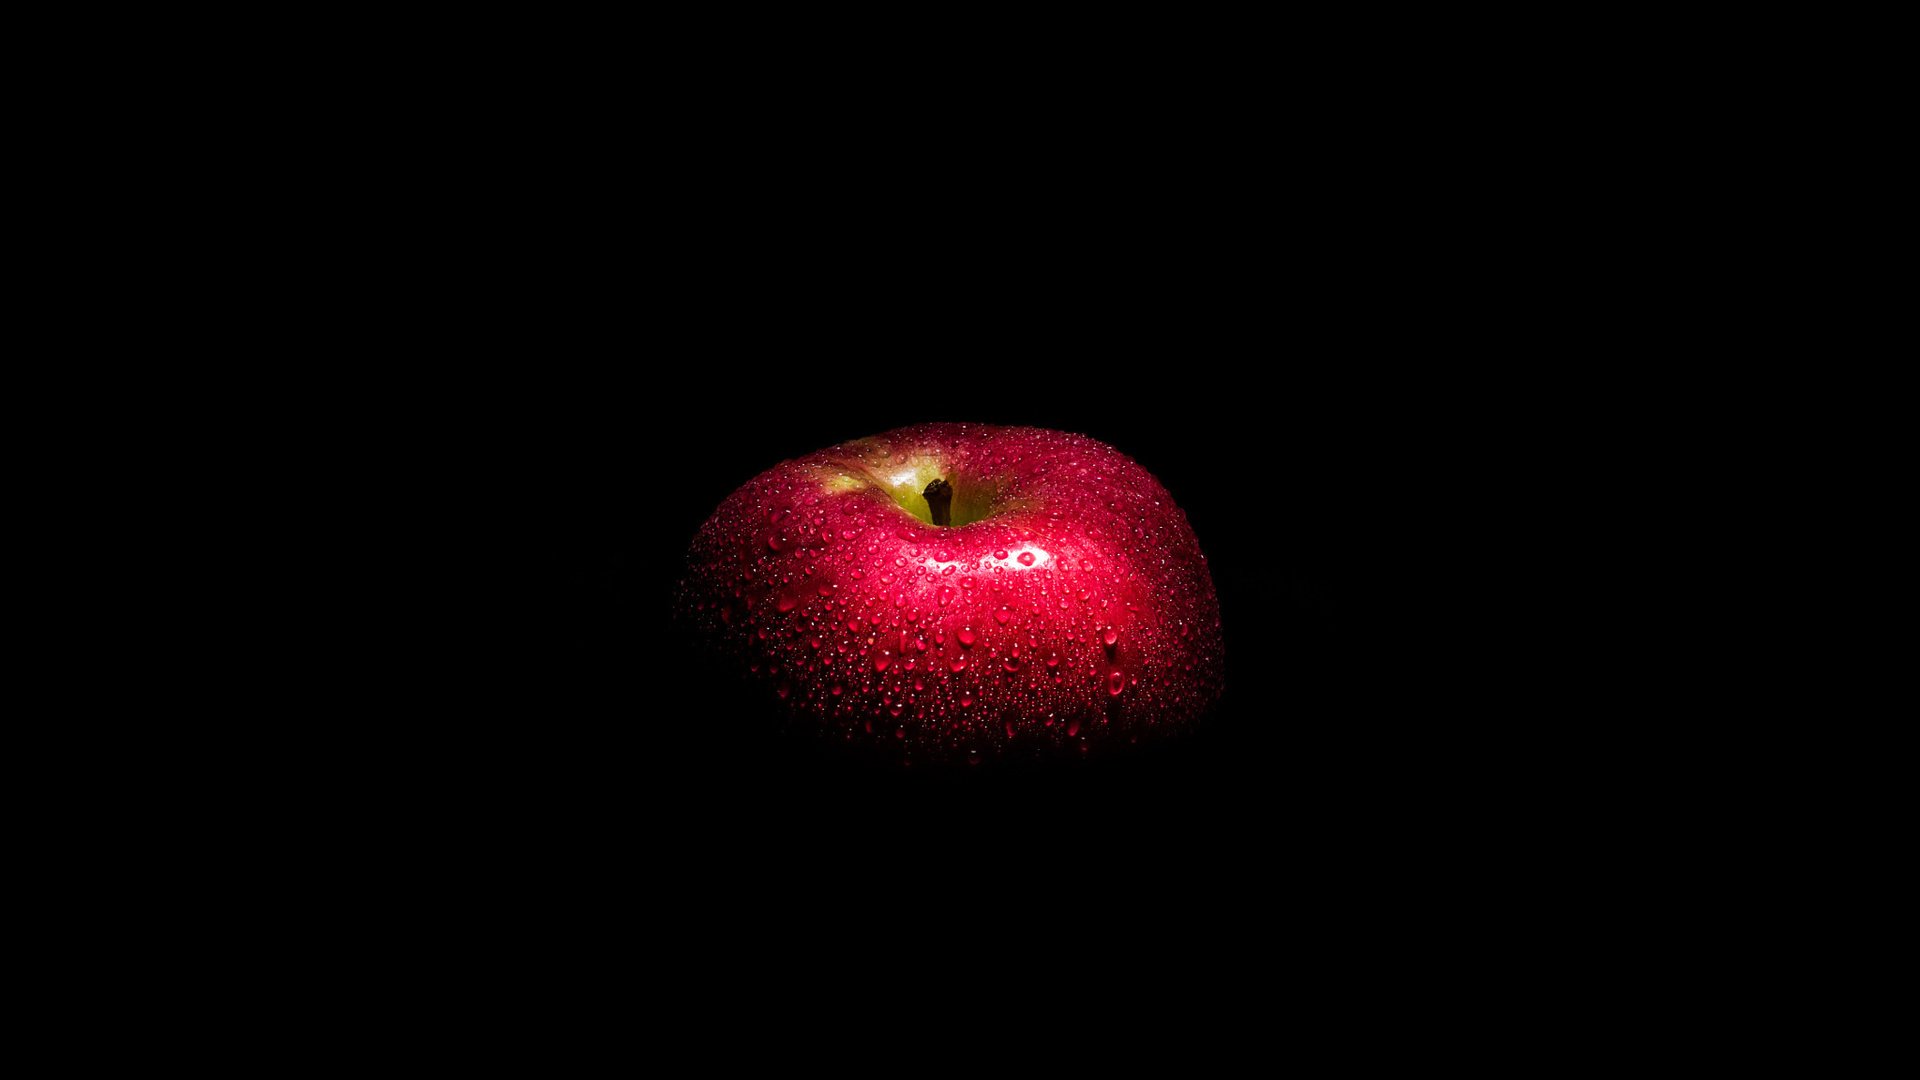 dark apple wallpaper,still life photography,black,red,fruit,apple